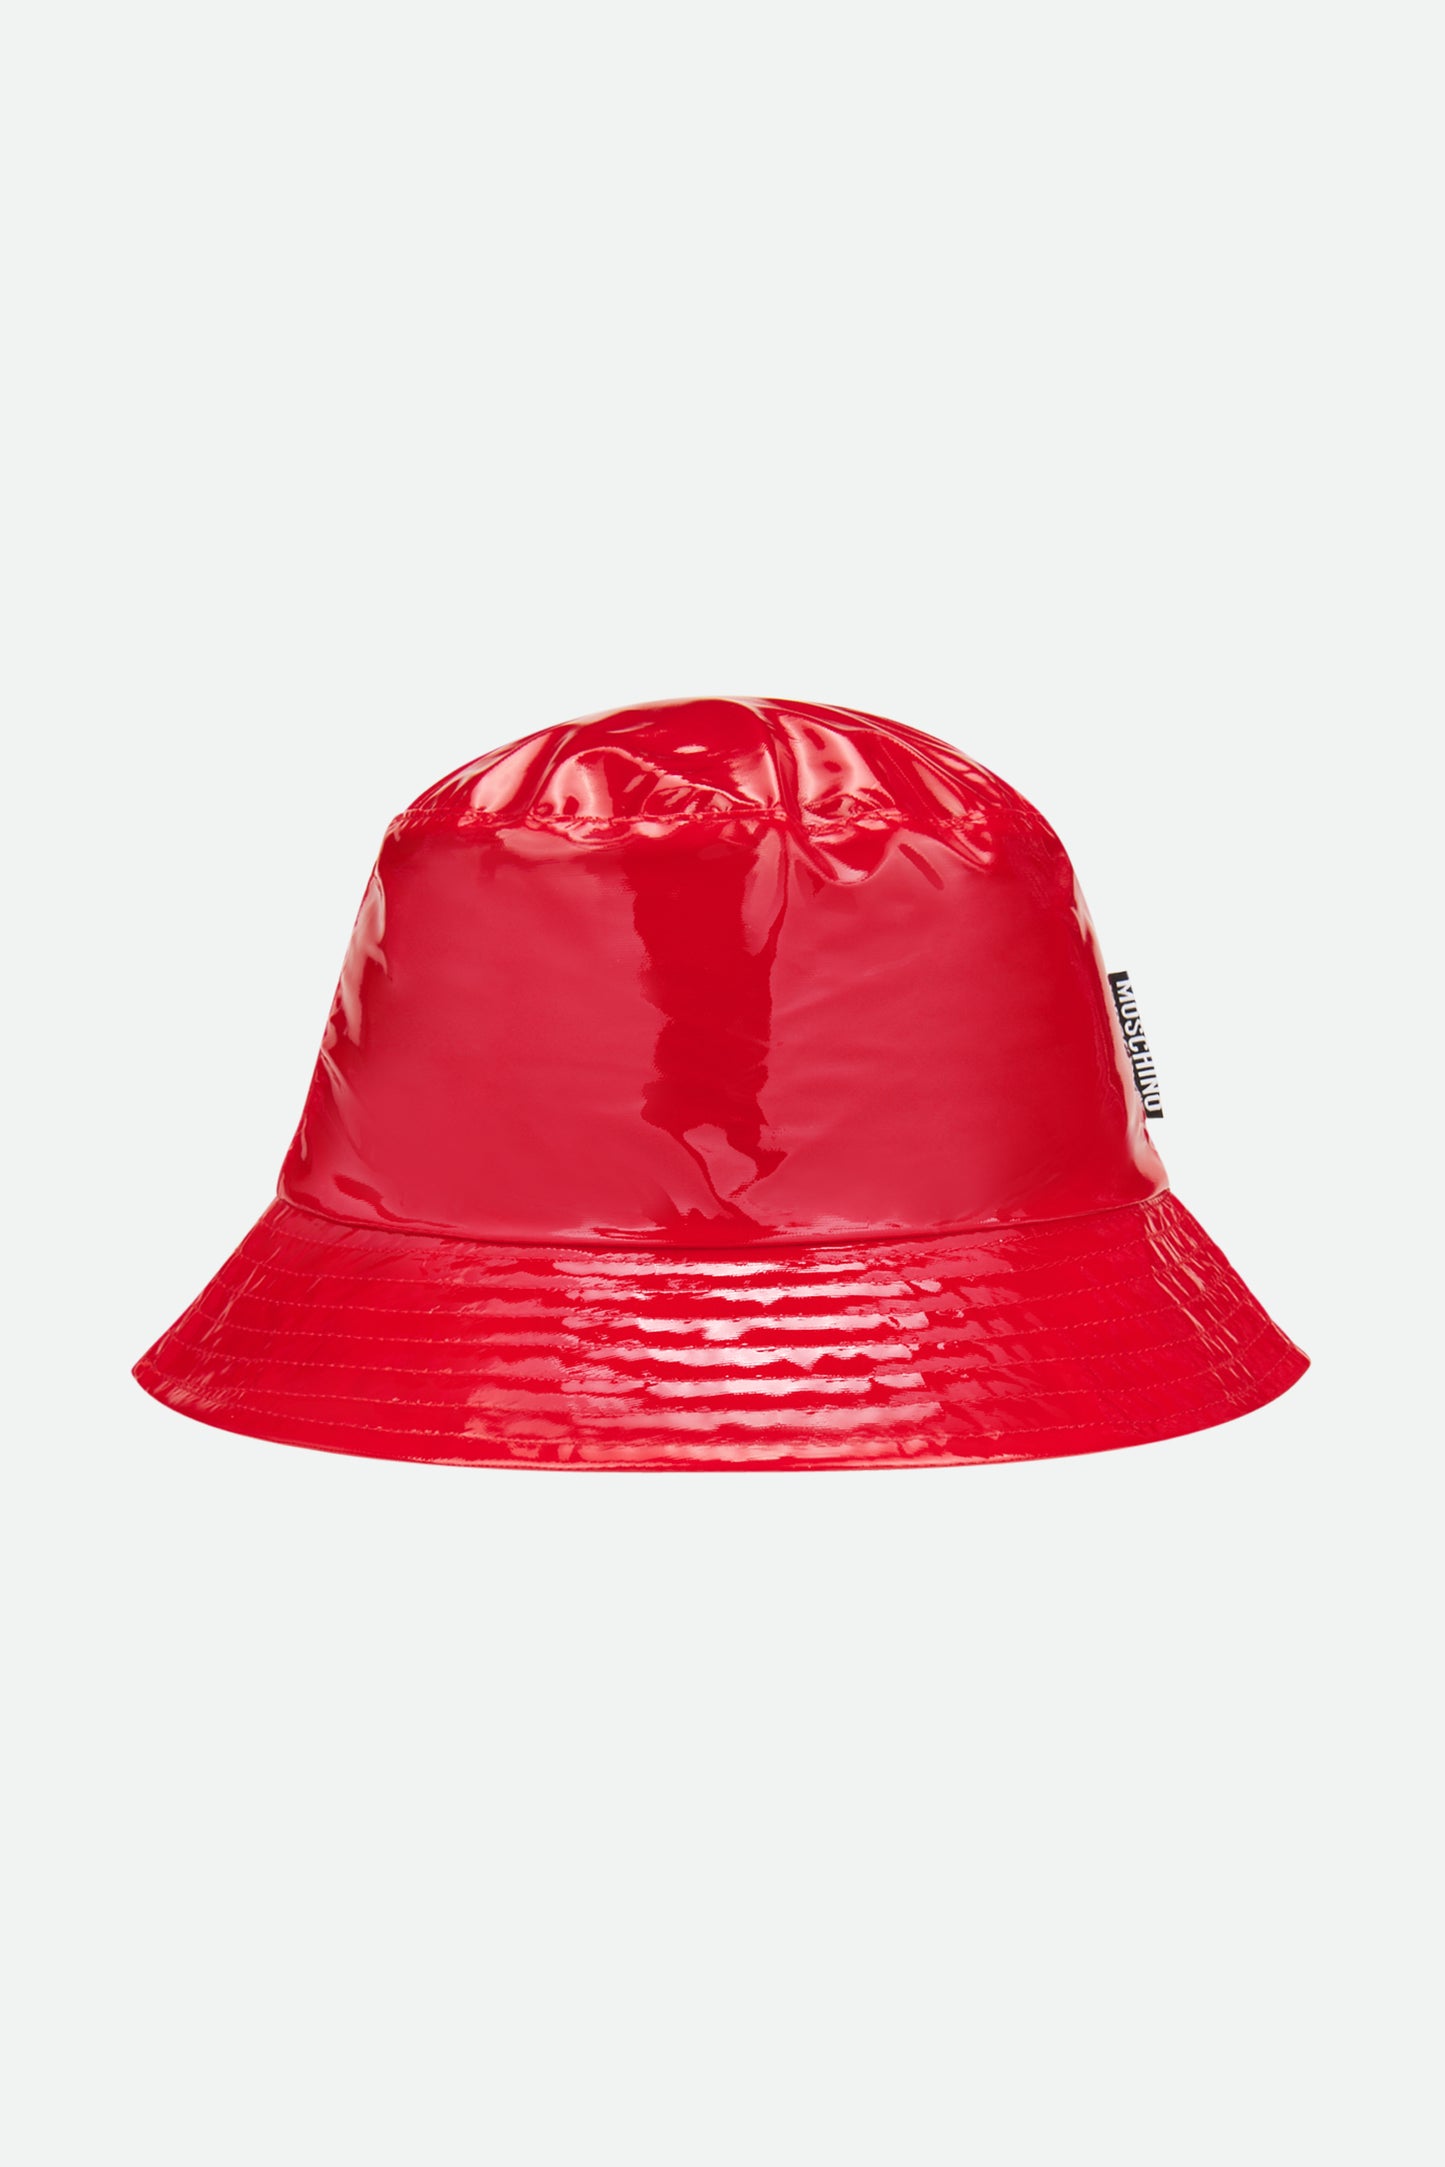 Moschino Red Vinyl Hat